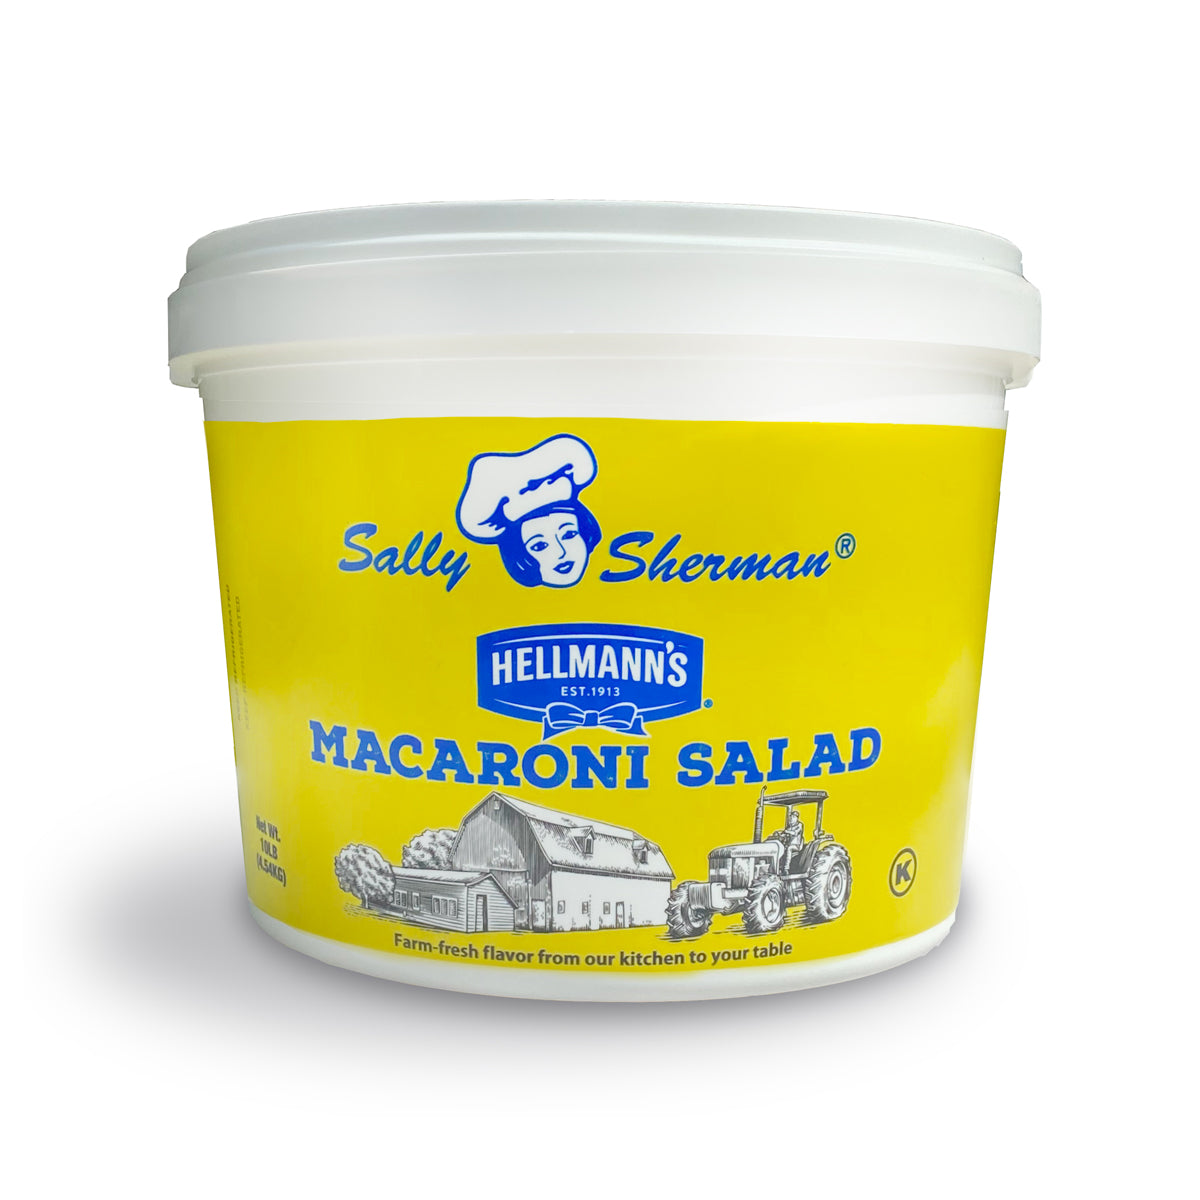 Sally Sherman Classic Macaroni Salad